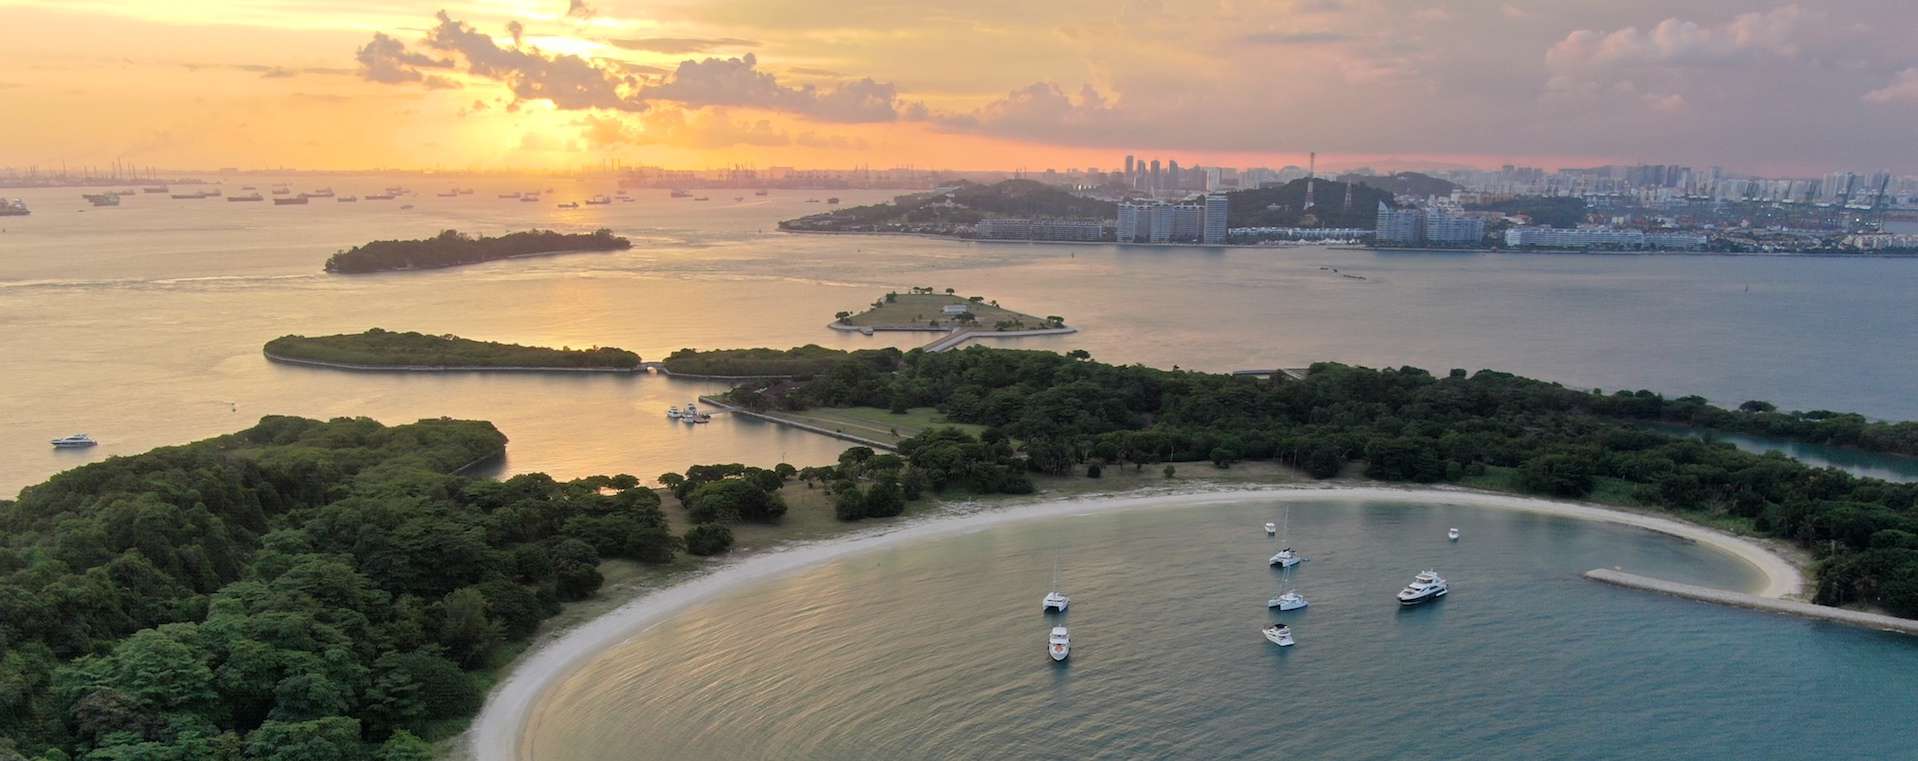 Singapore marine guide lazarus islands sunset